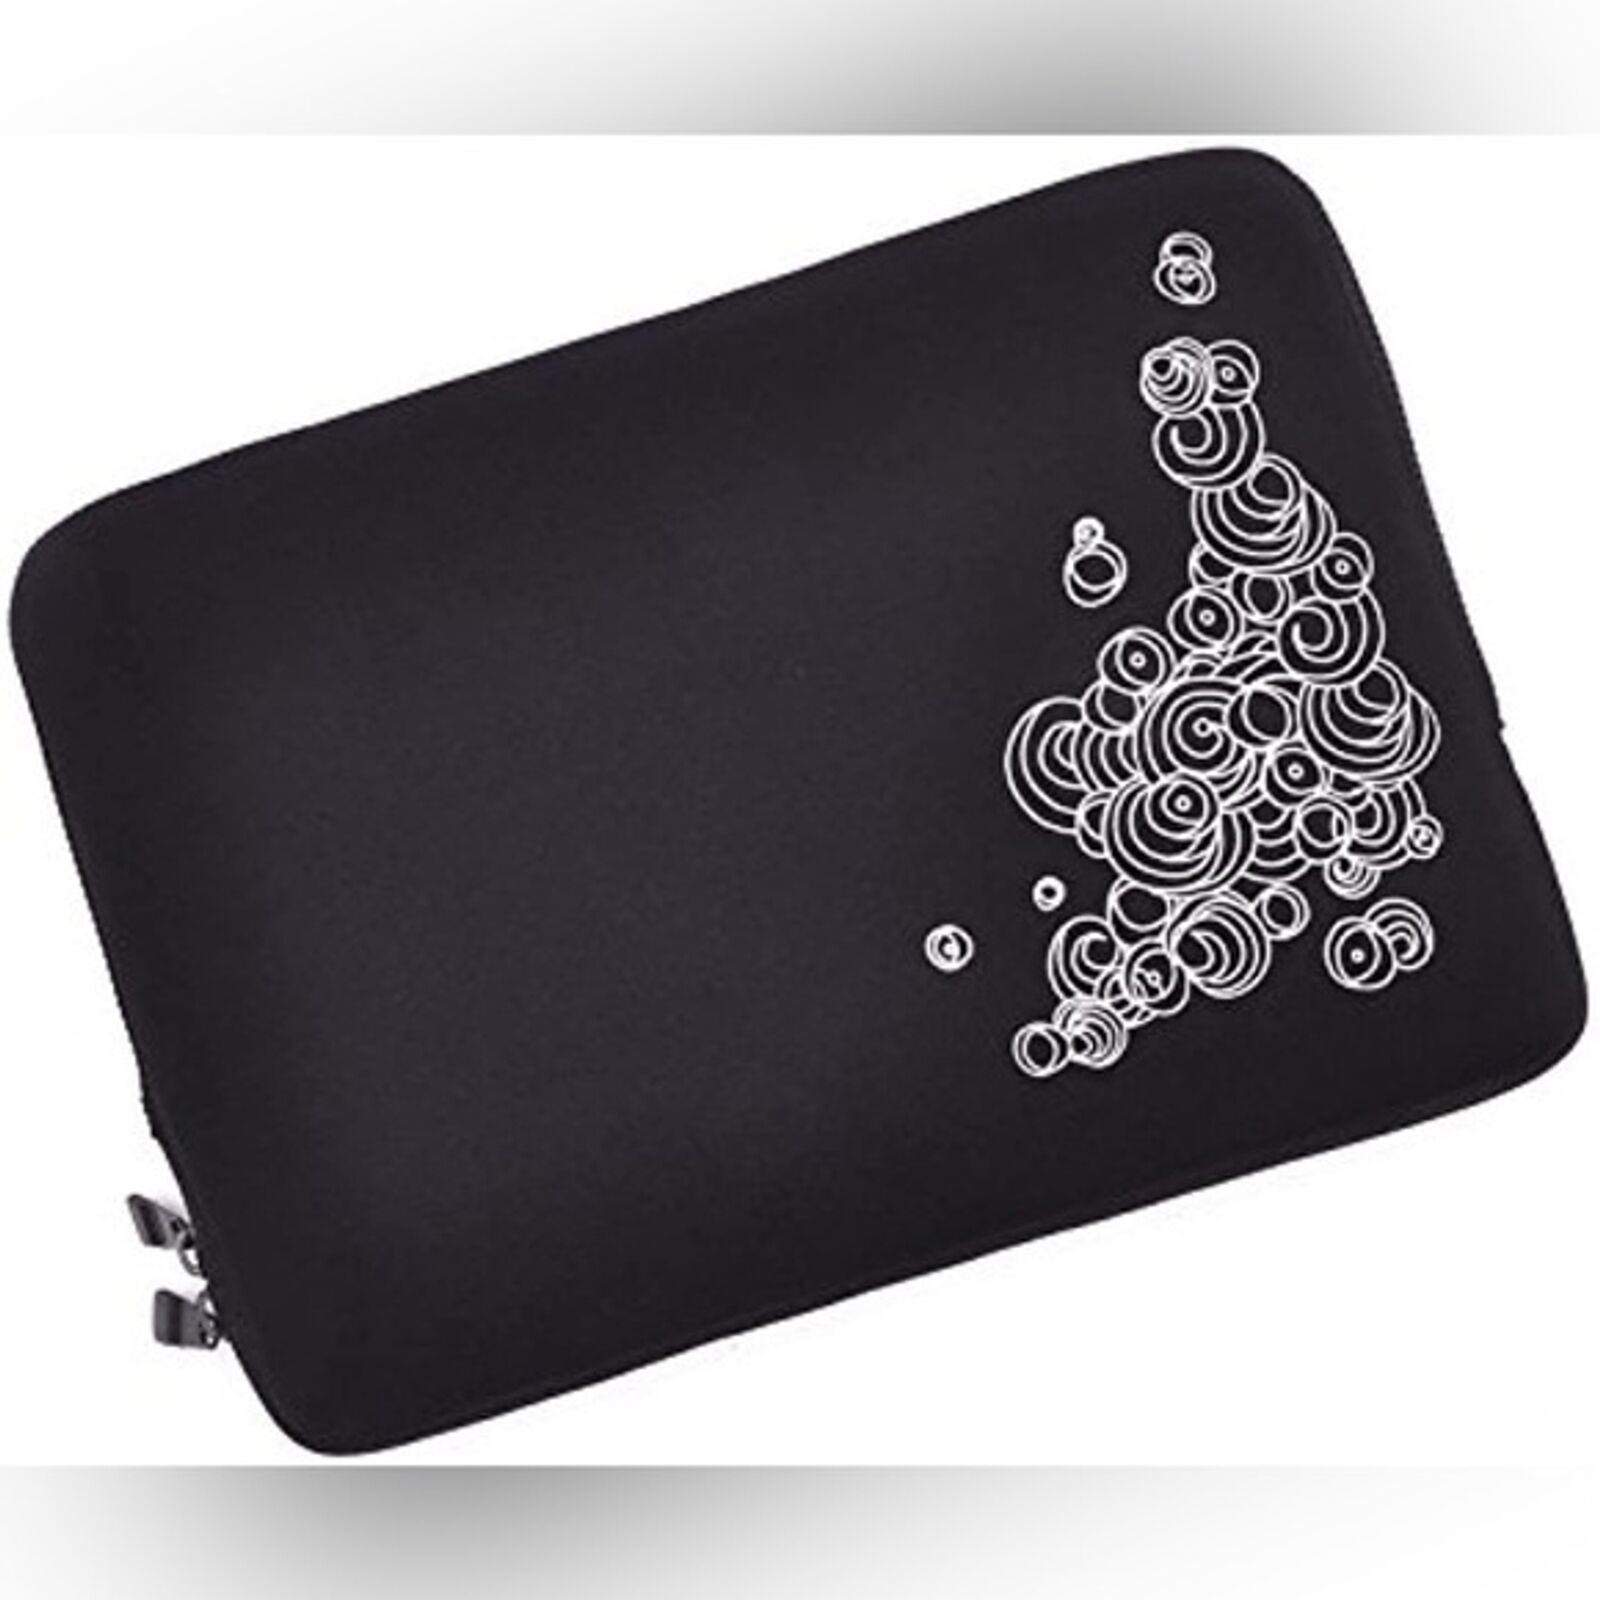 Black HP Tablet Case Sleeve Mini Notebook Laptop Computer Protector Travel Bag - $11.88